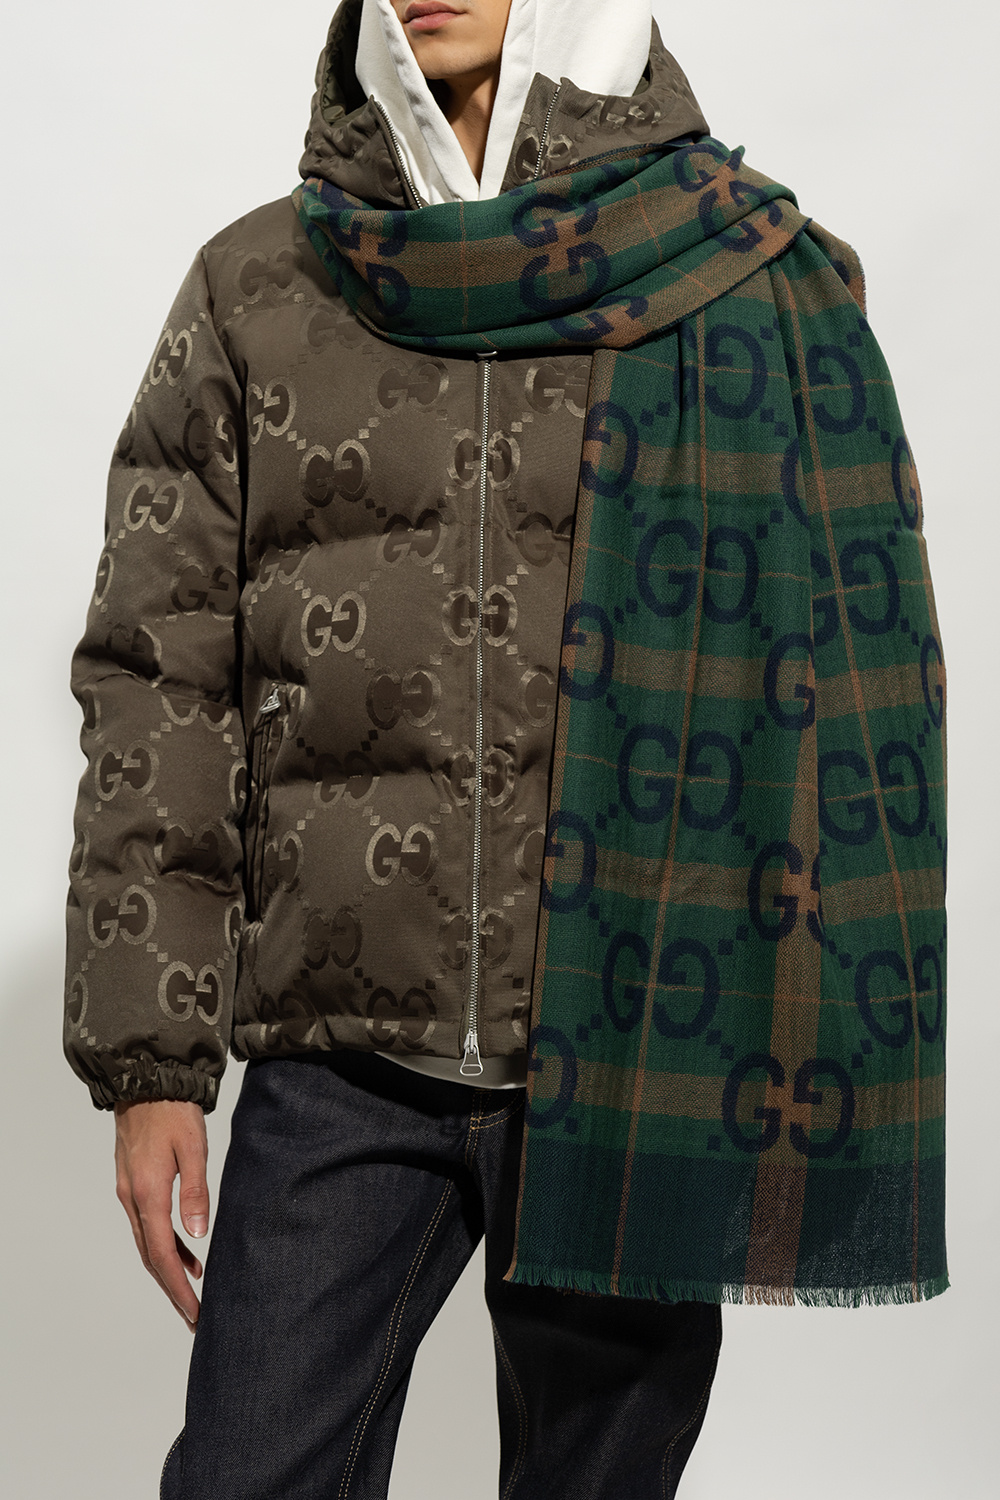 Gucci Monogram-pattern Fringed-trim Wool Scarf in Gray